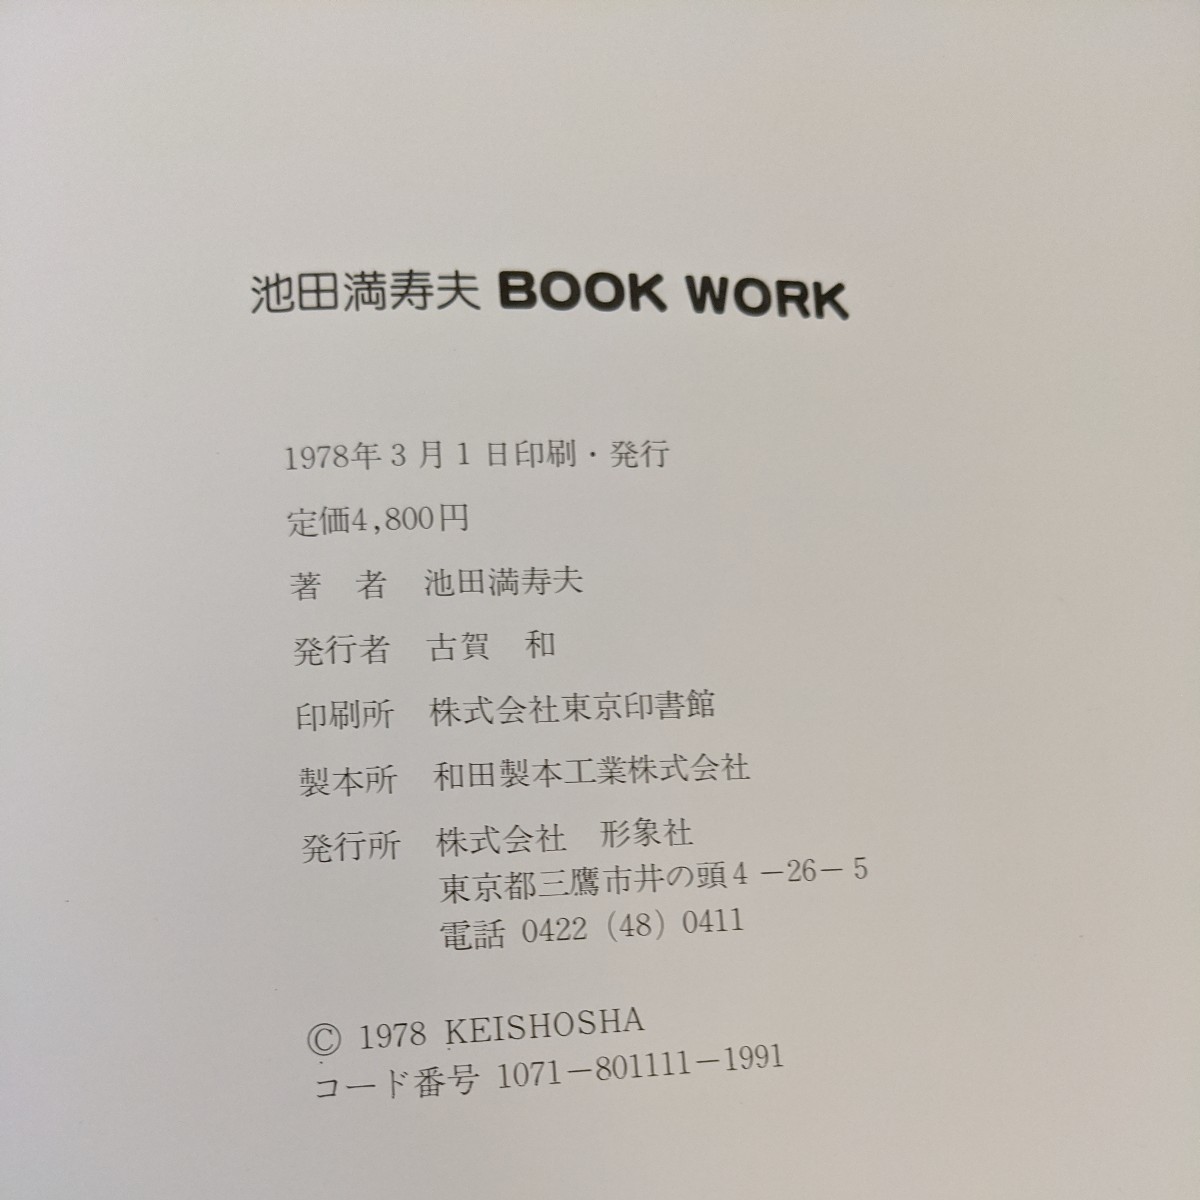  Ikeda Masuo BOOK WORK1947-1977 работа 